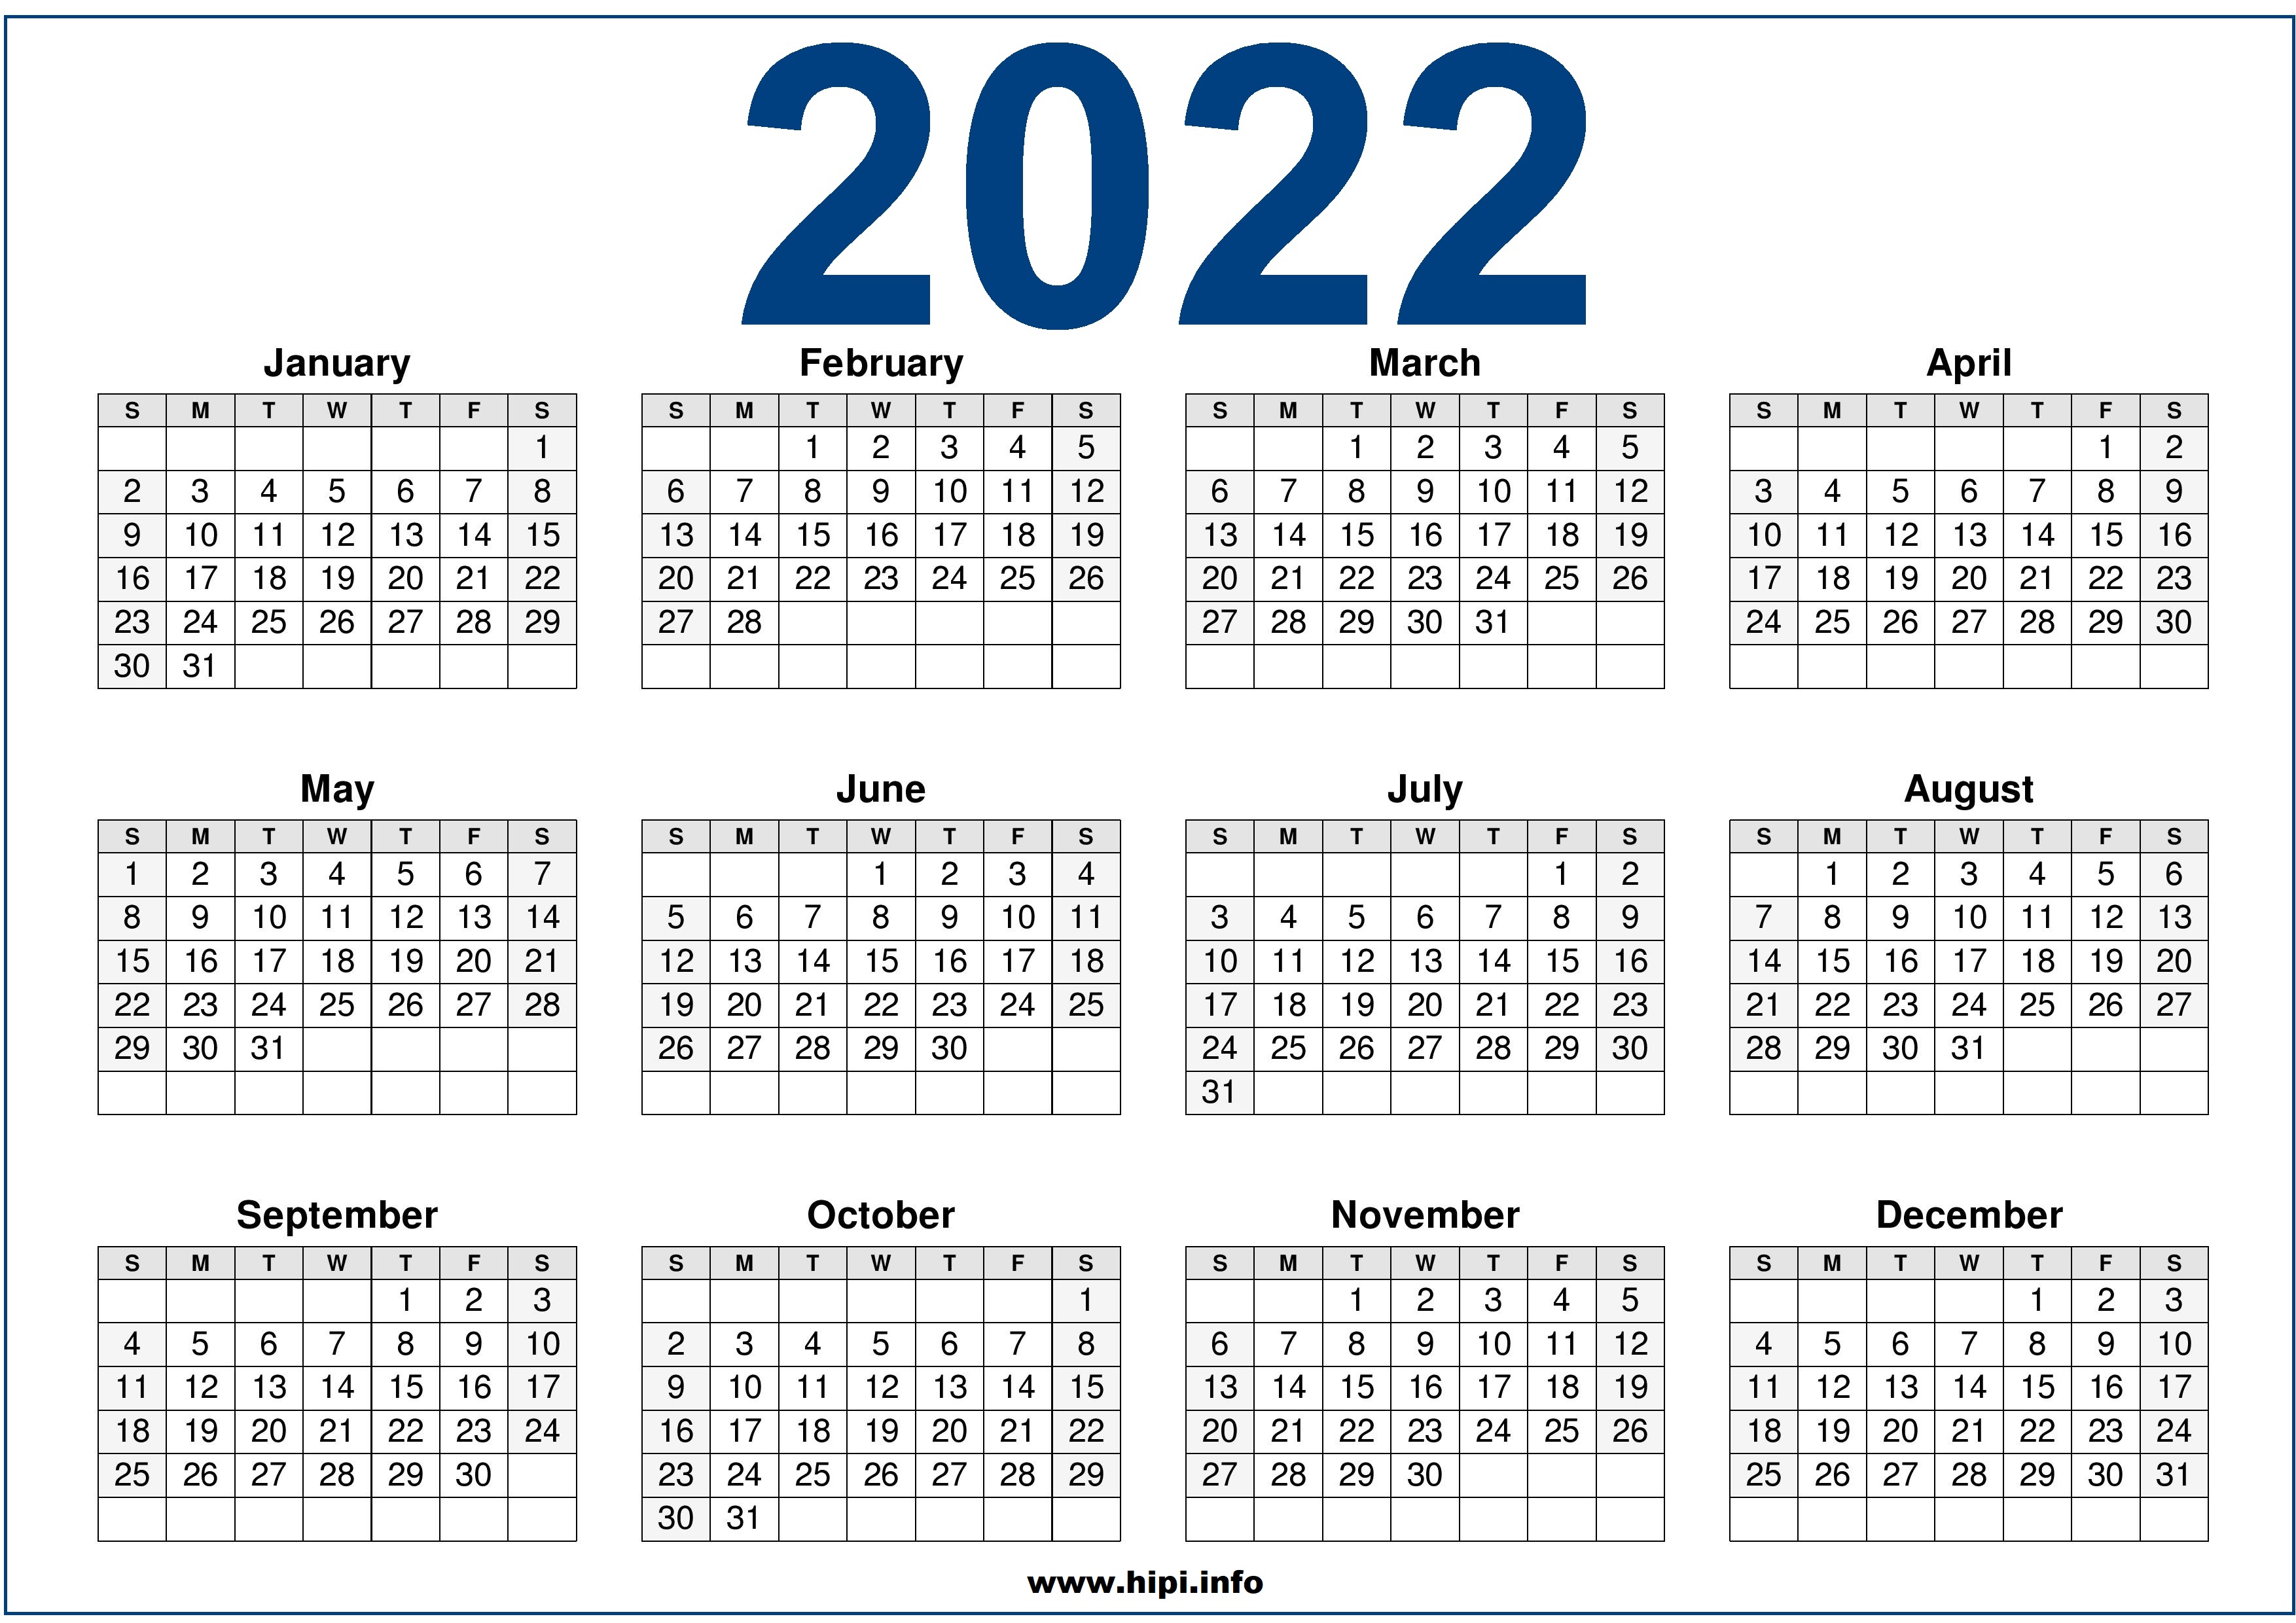 Print 2022 Calendar One Page 2022 Calendar Printable Us One Page - Hipi.info | Calendars Printable Free